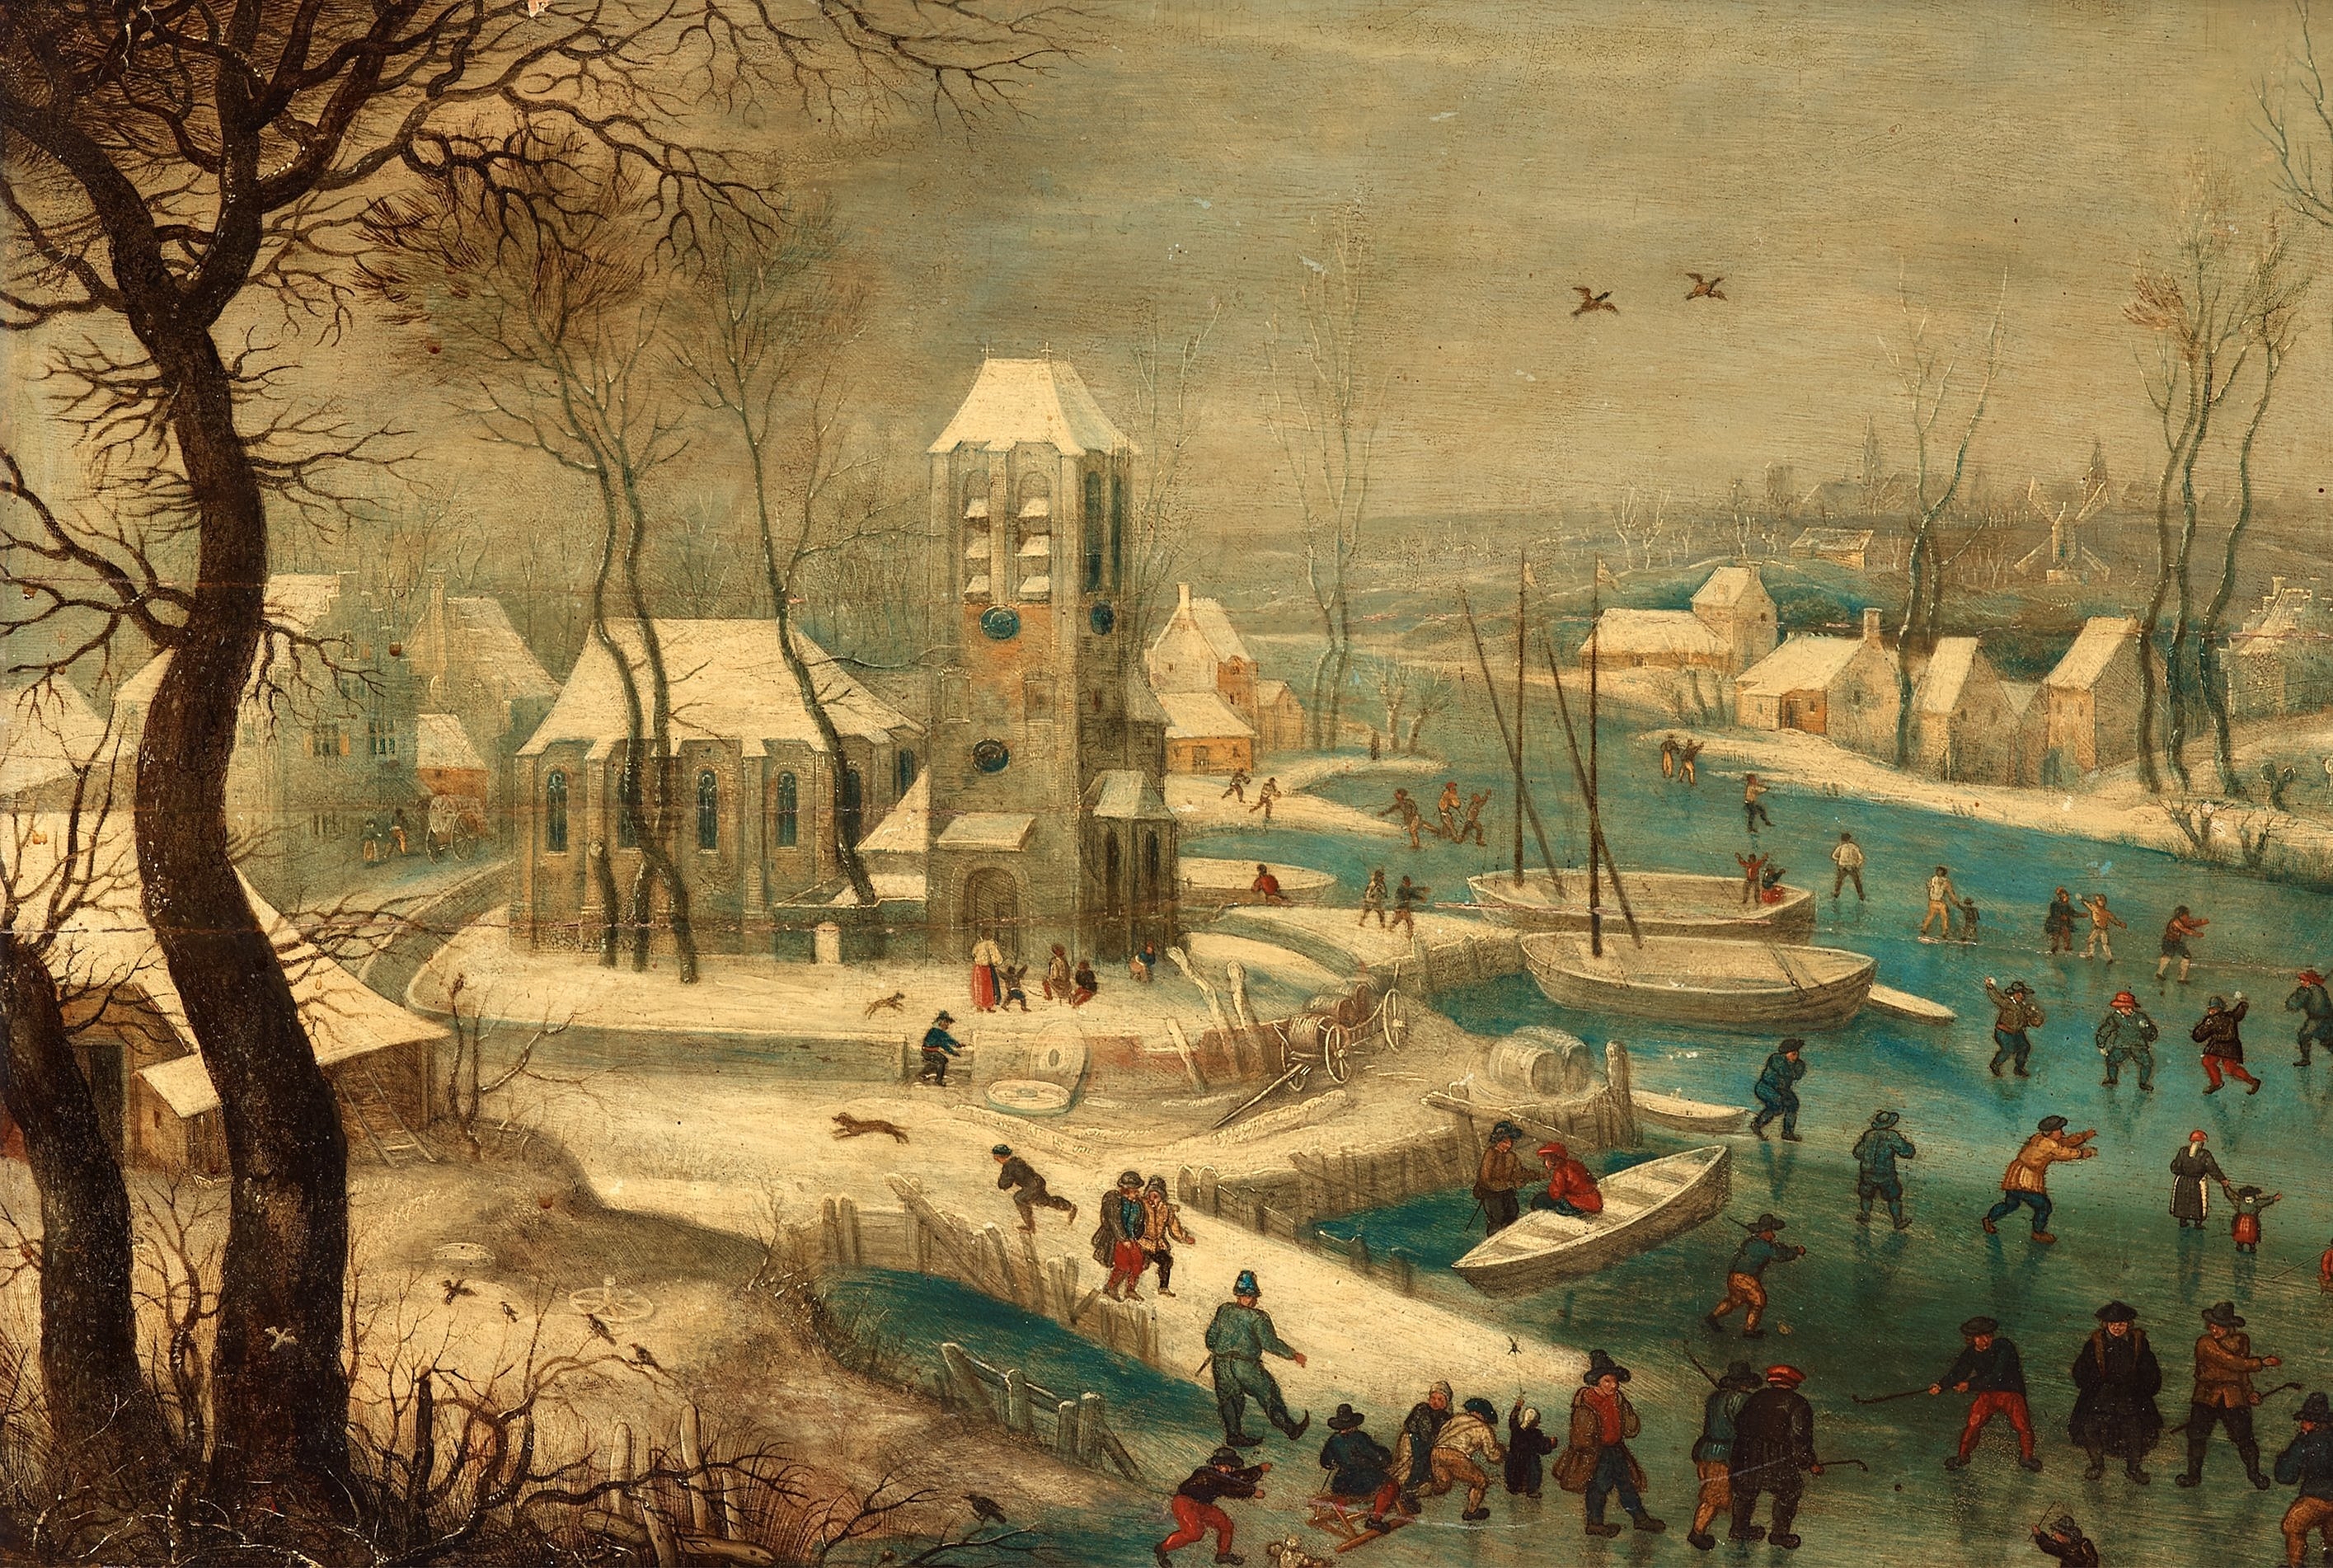 Winter Landscape with Skaters by Pieter Brueghel the Elder